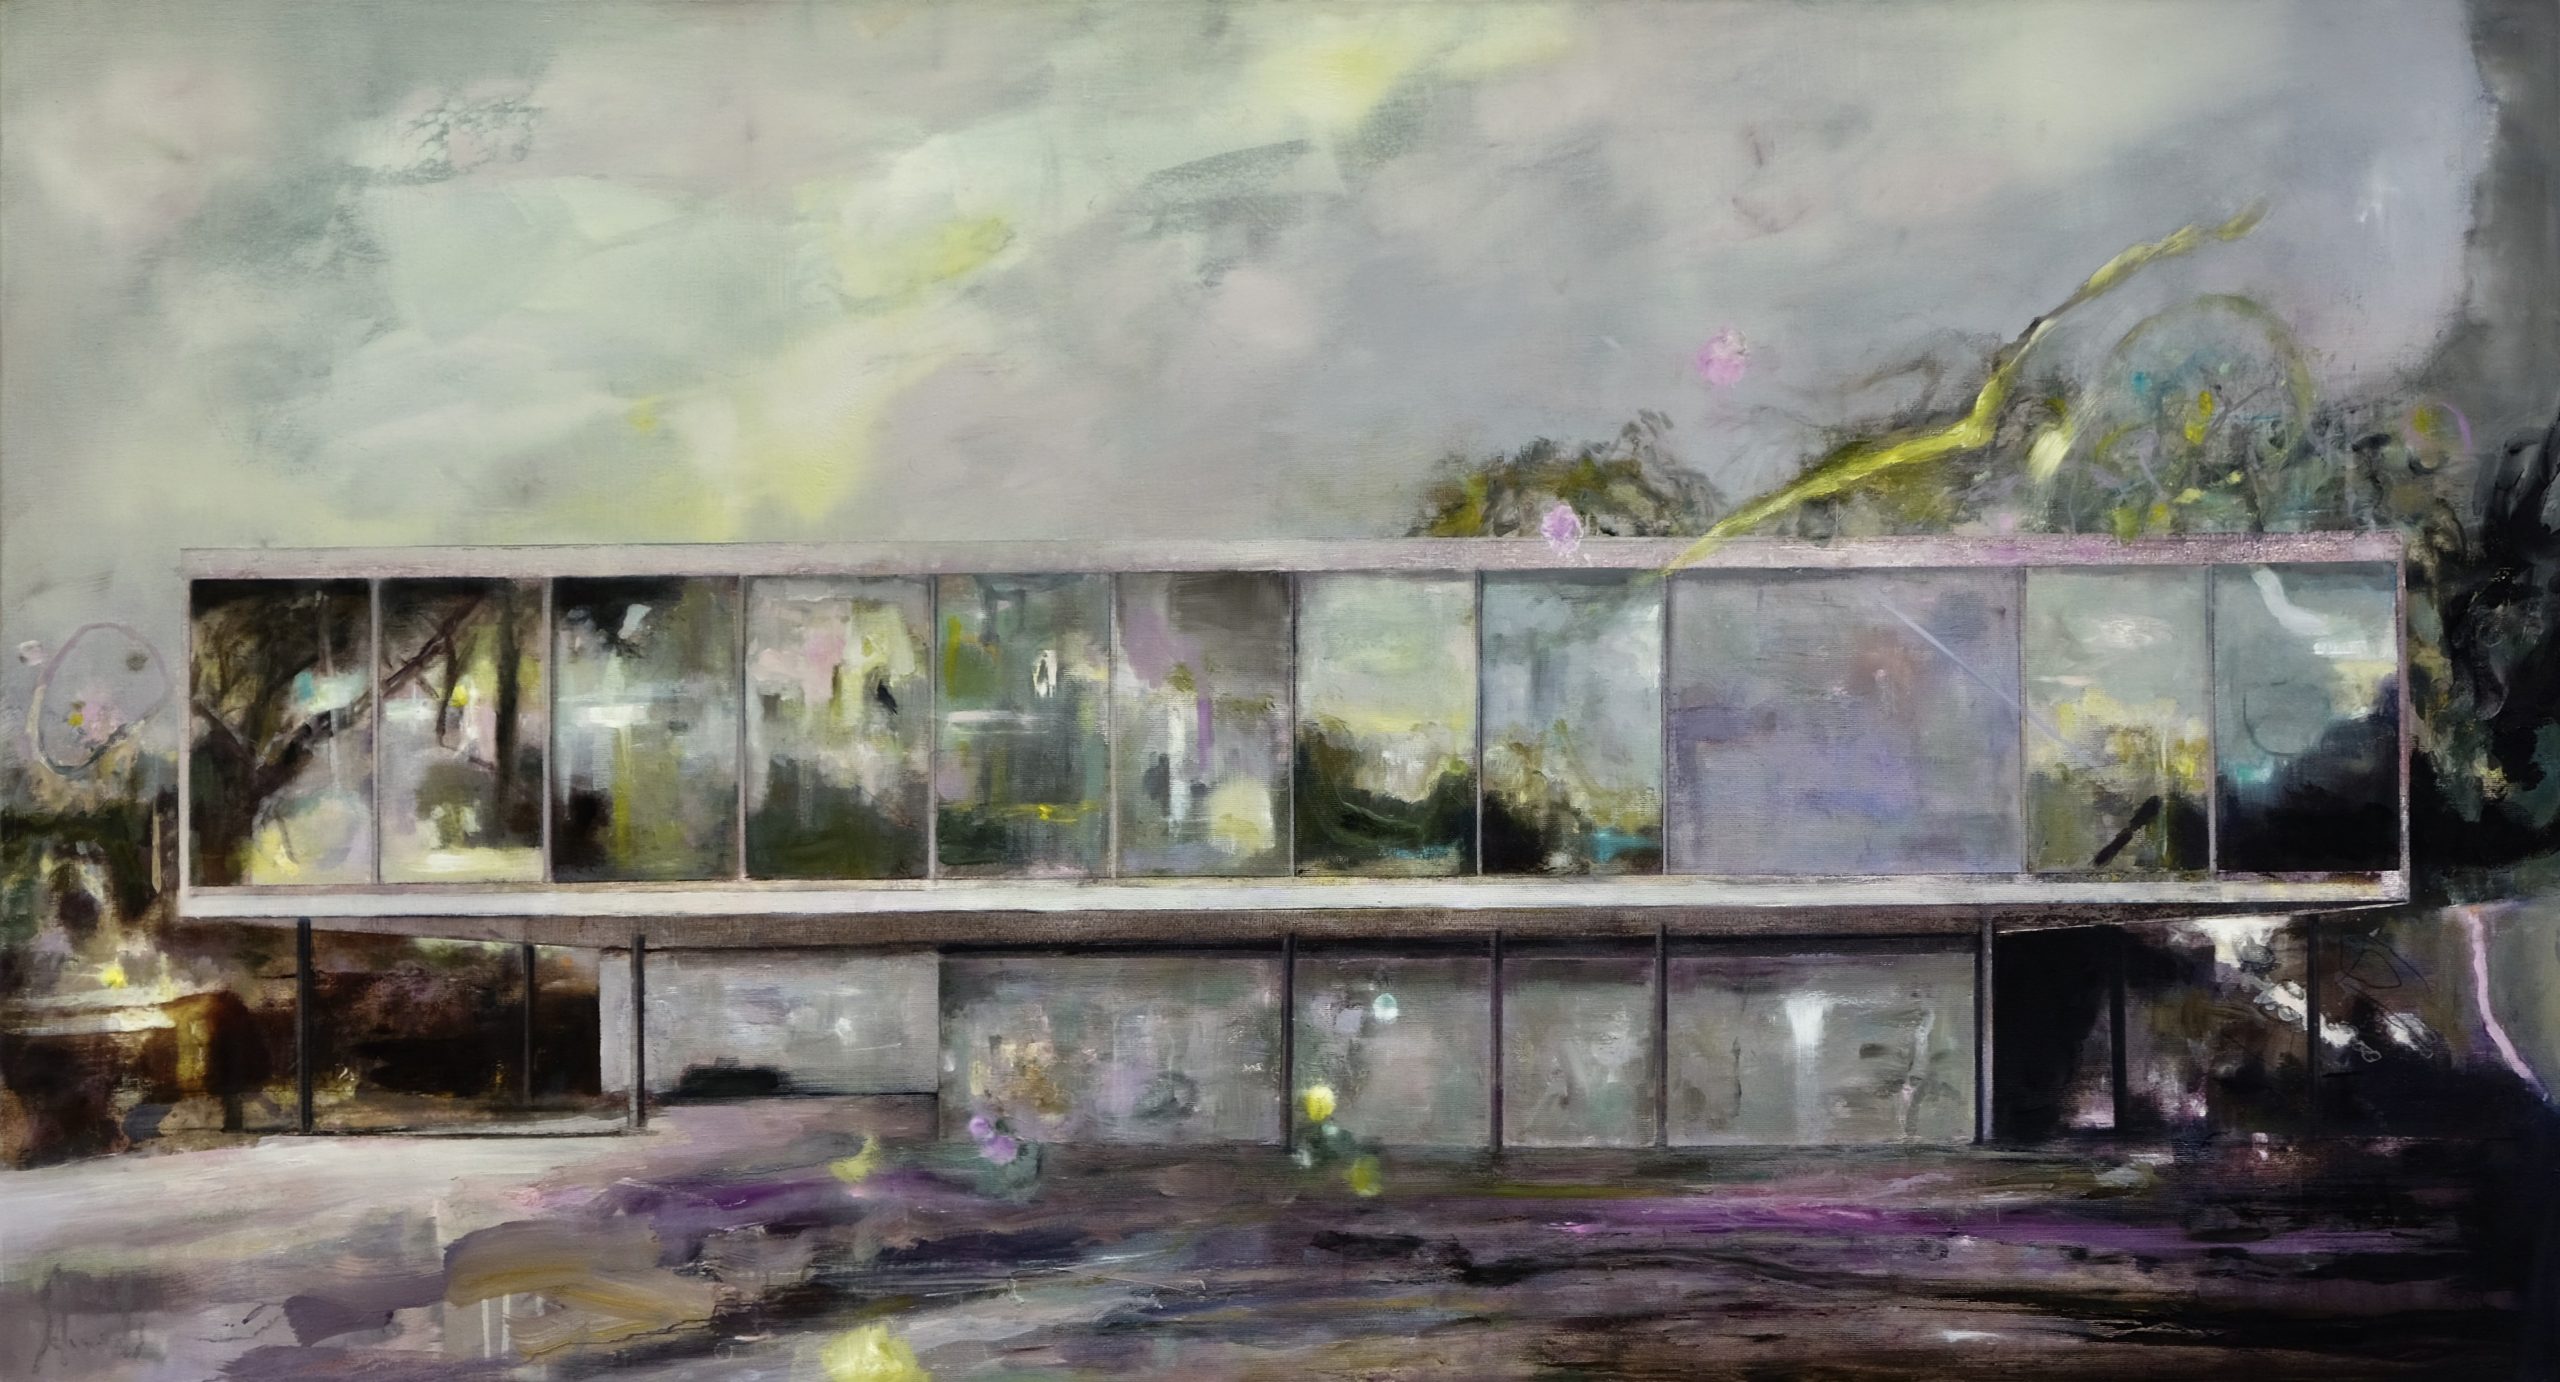 Carola Schapals: Studio House, Unikat, Öl auf Leinwand, 150 x 85 cm, 2020, 8.350 eur